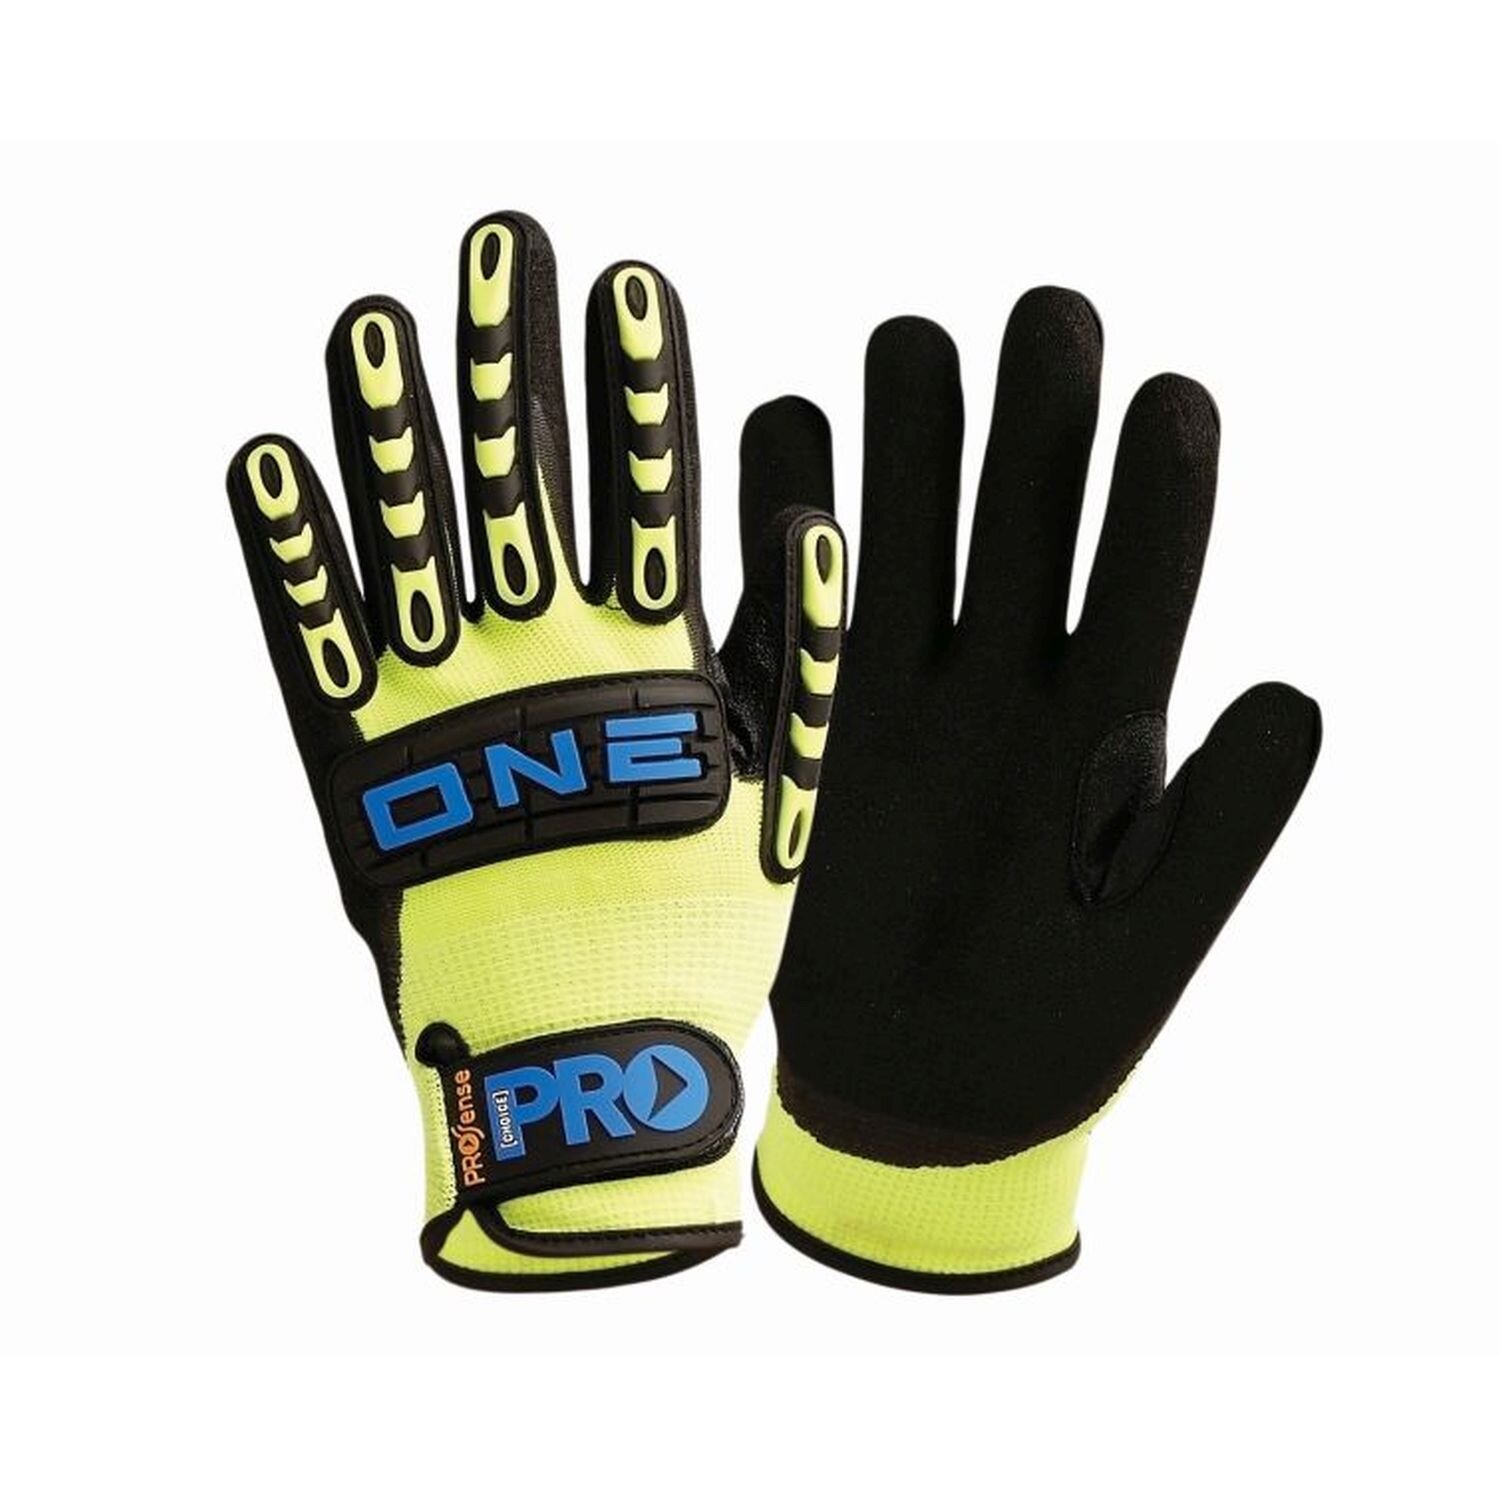 Pro One Foam Nitrile Foam Palm Glove